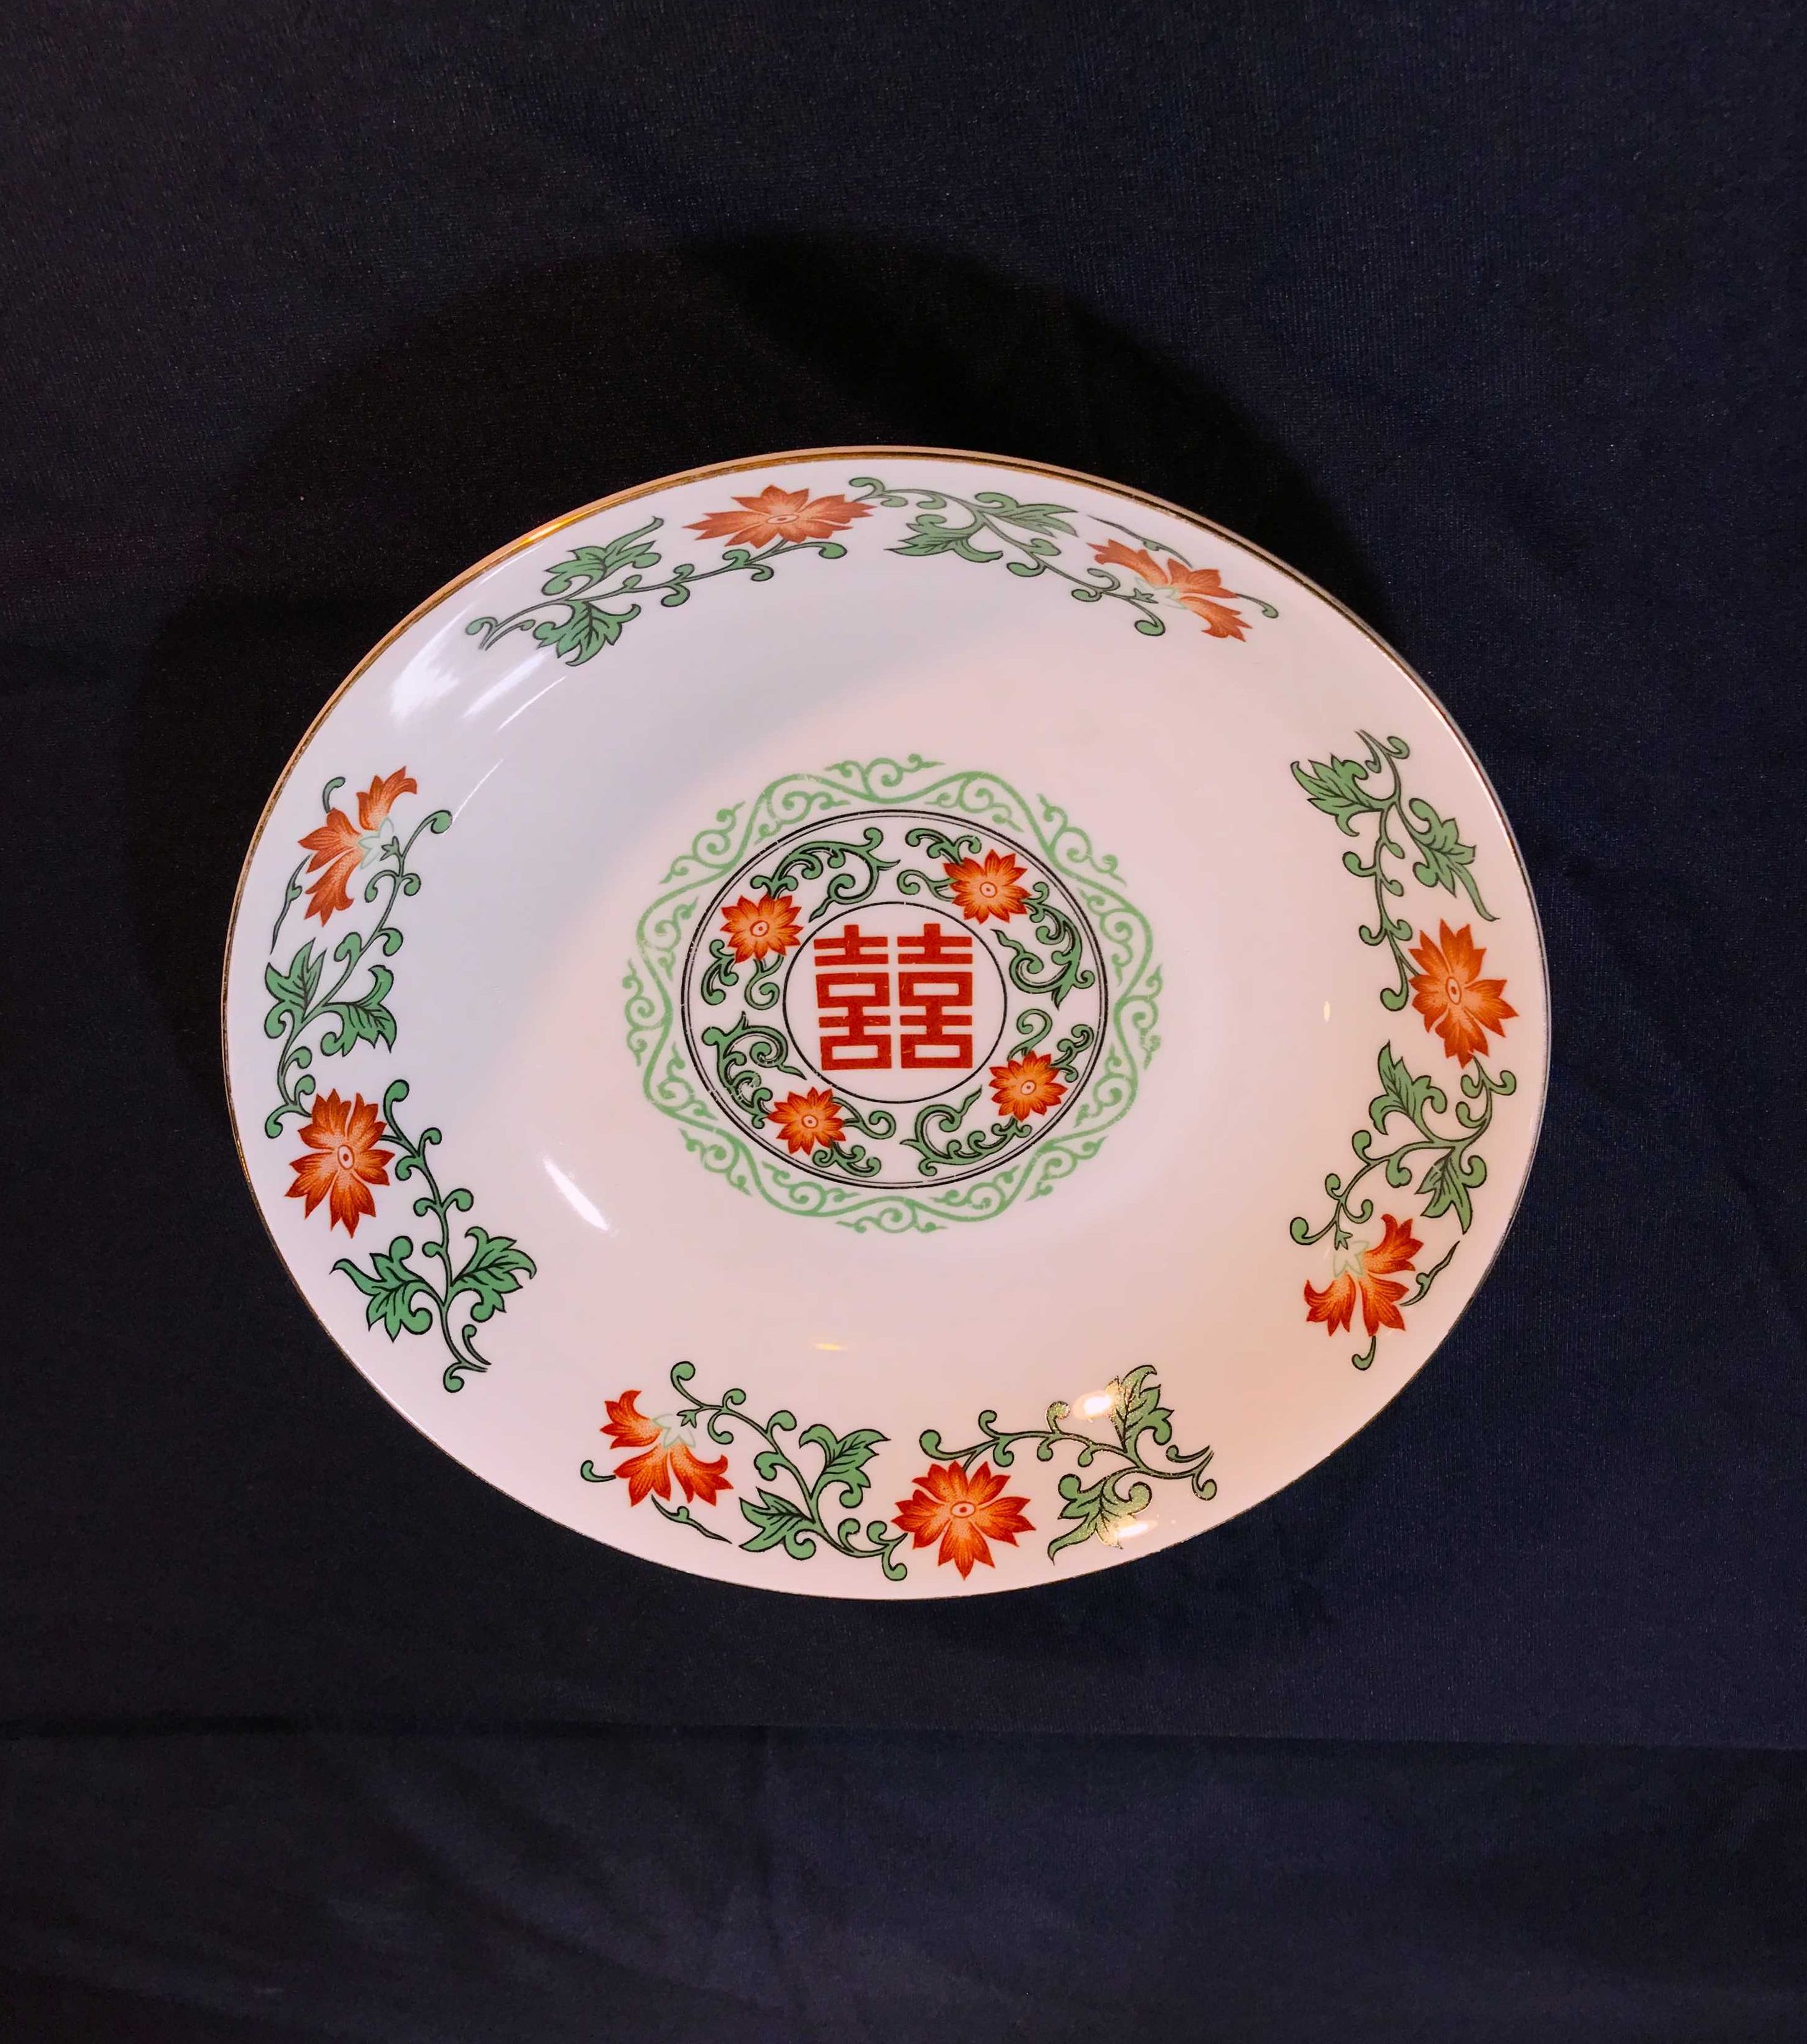 miska chińska porcelana vintage wzór kwiat symbol podwójnego szczęścia